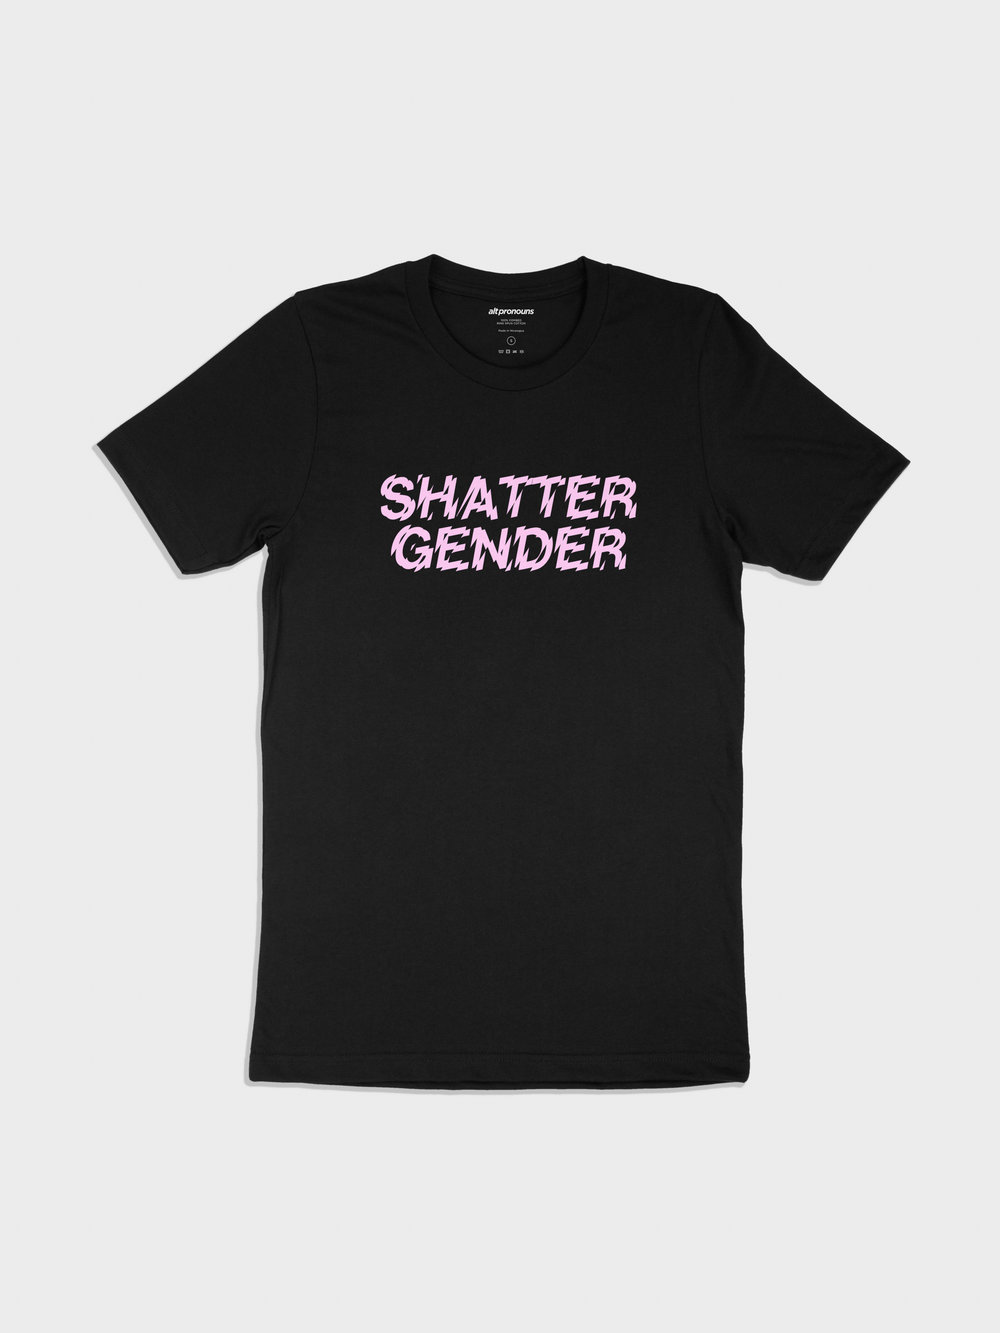 Shatter Gender Tee